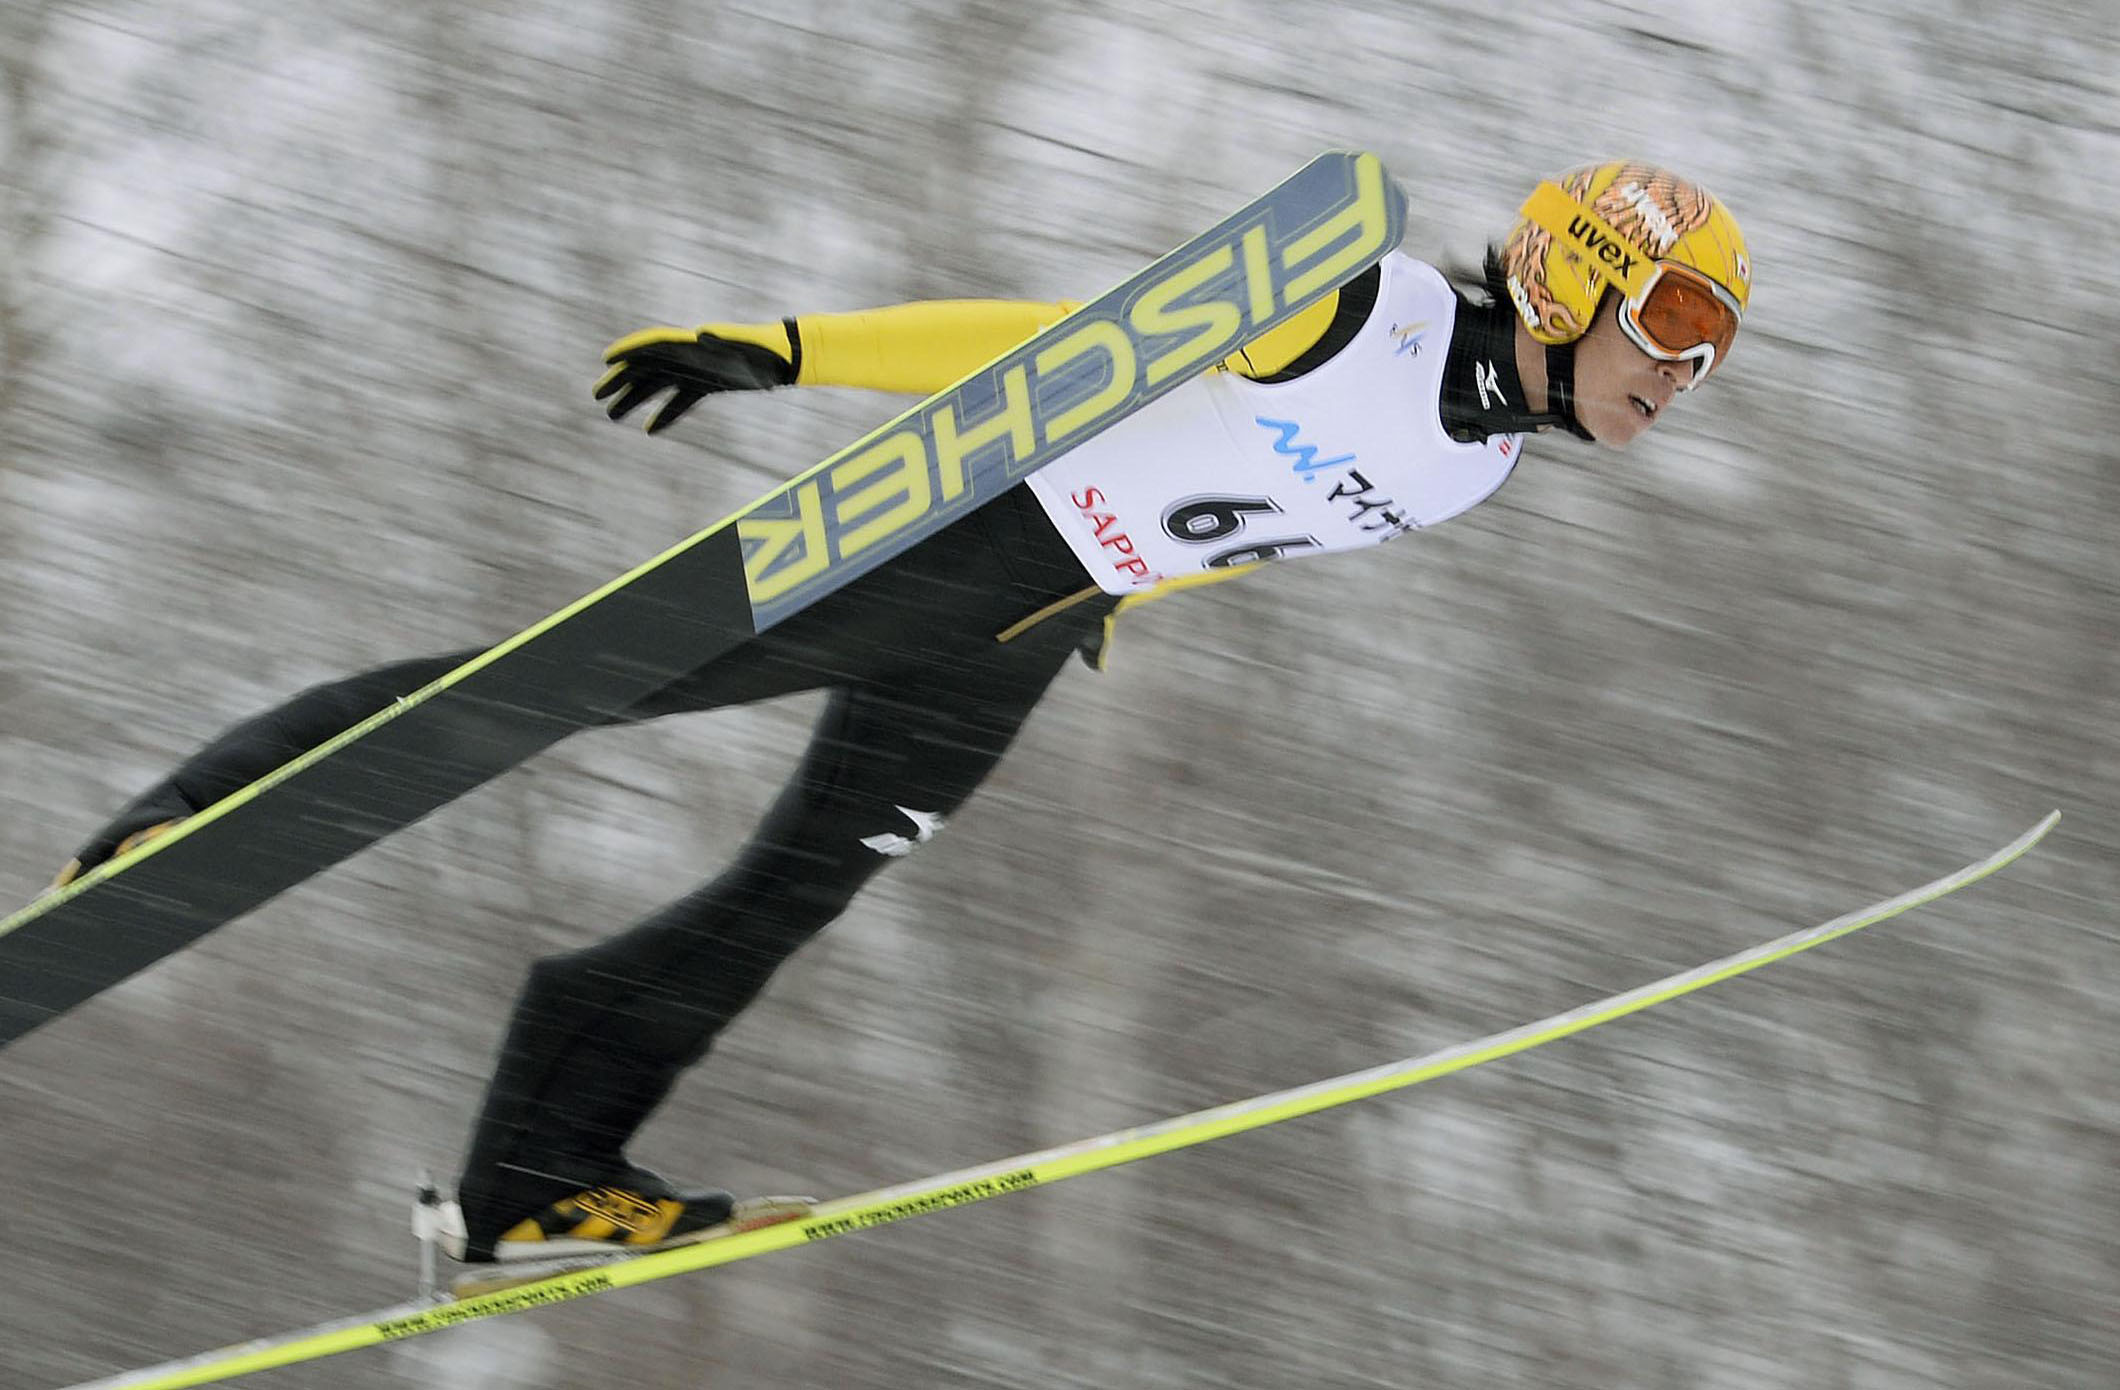 Veteran Jumper Kasai Showing No Signs Of Slowing Down The Japan intended for ski jumping kasai regarding Residence